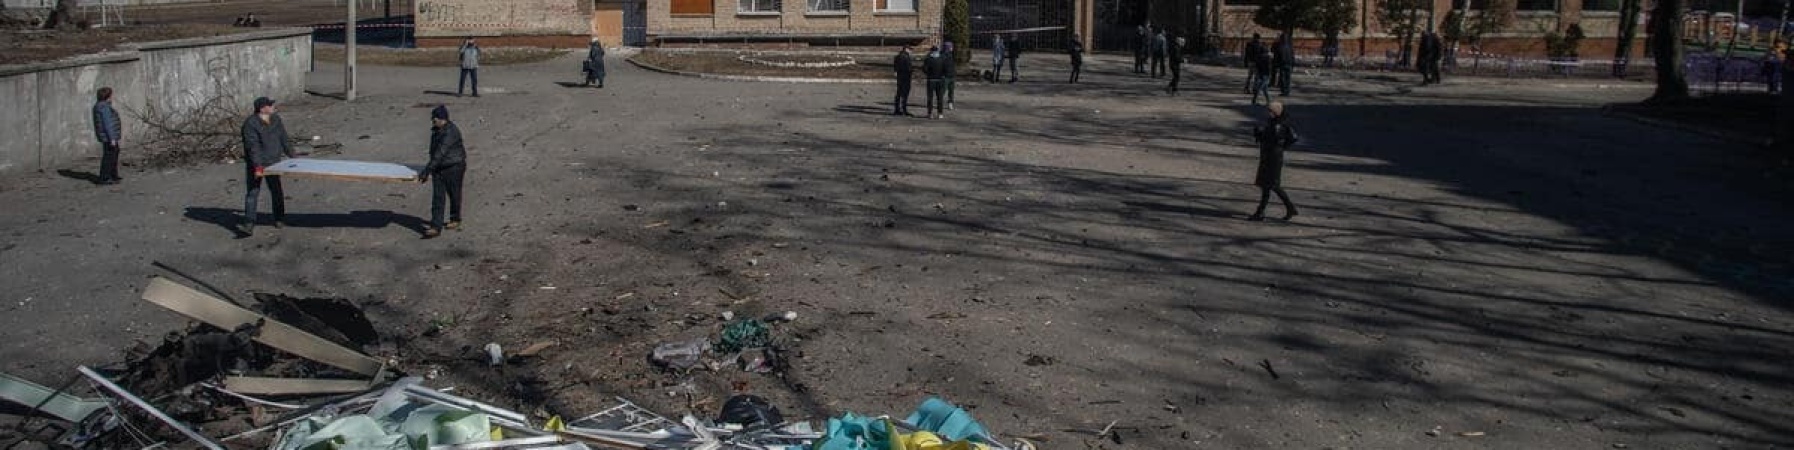 Macerie di scuola distrutta in Ucraina